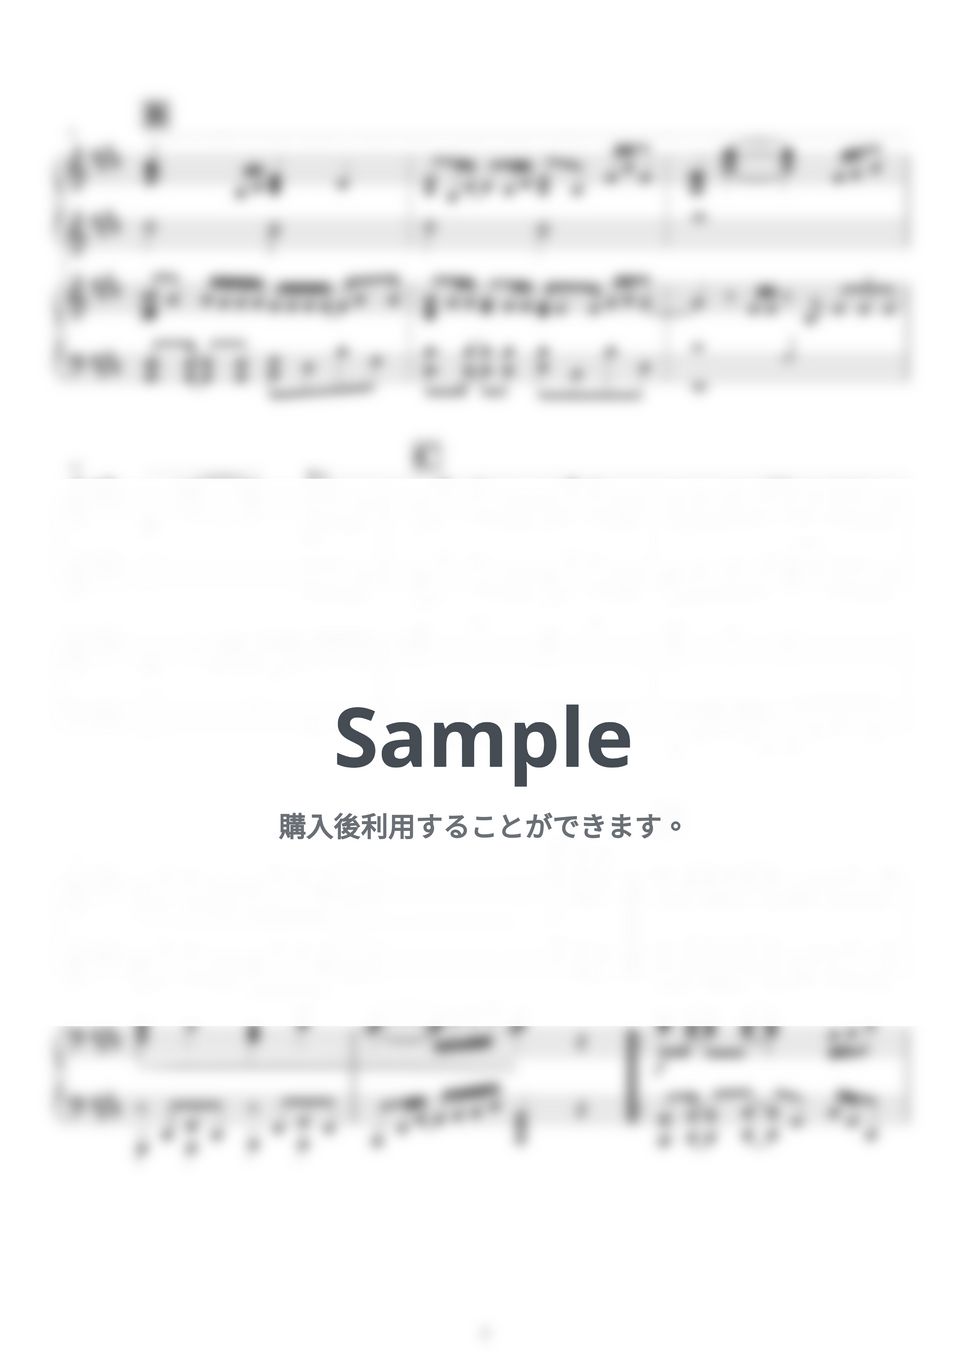 milet - Anytime Anywhere (ピアノ連弾/葬送のフリーレン) by norimaki